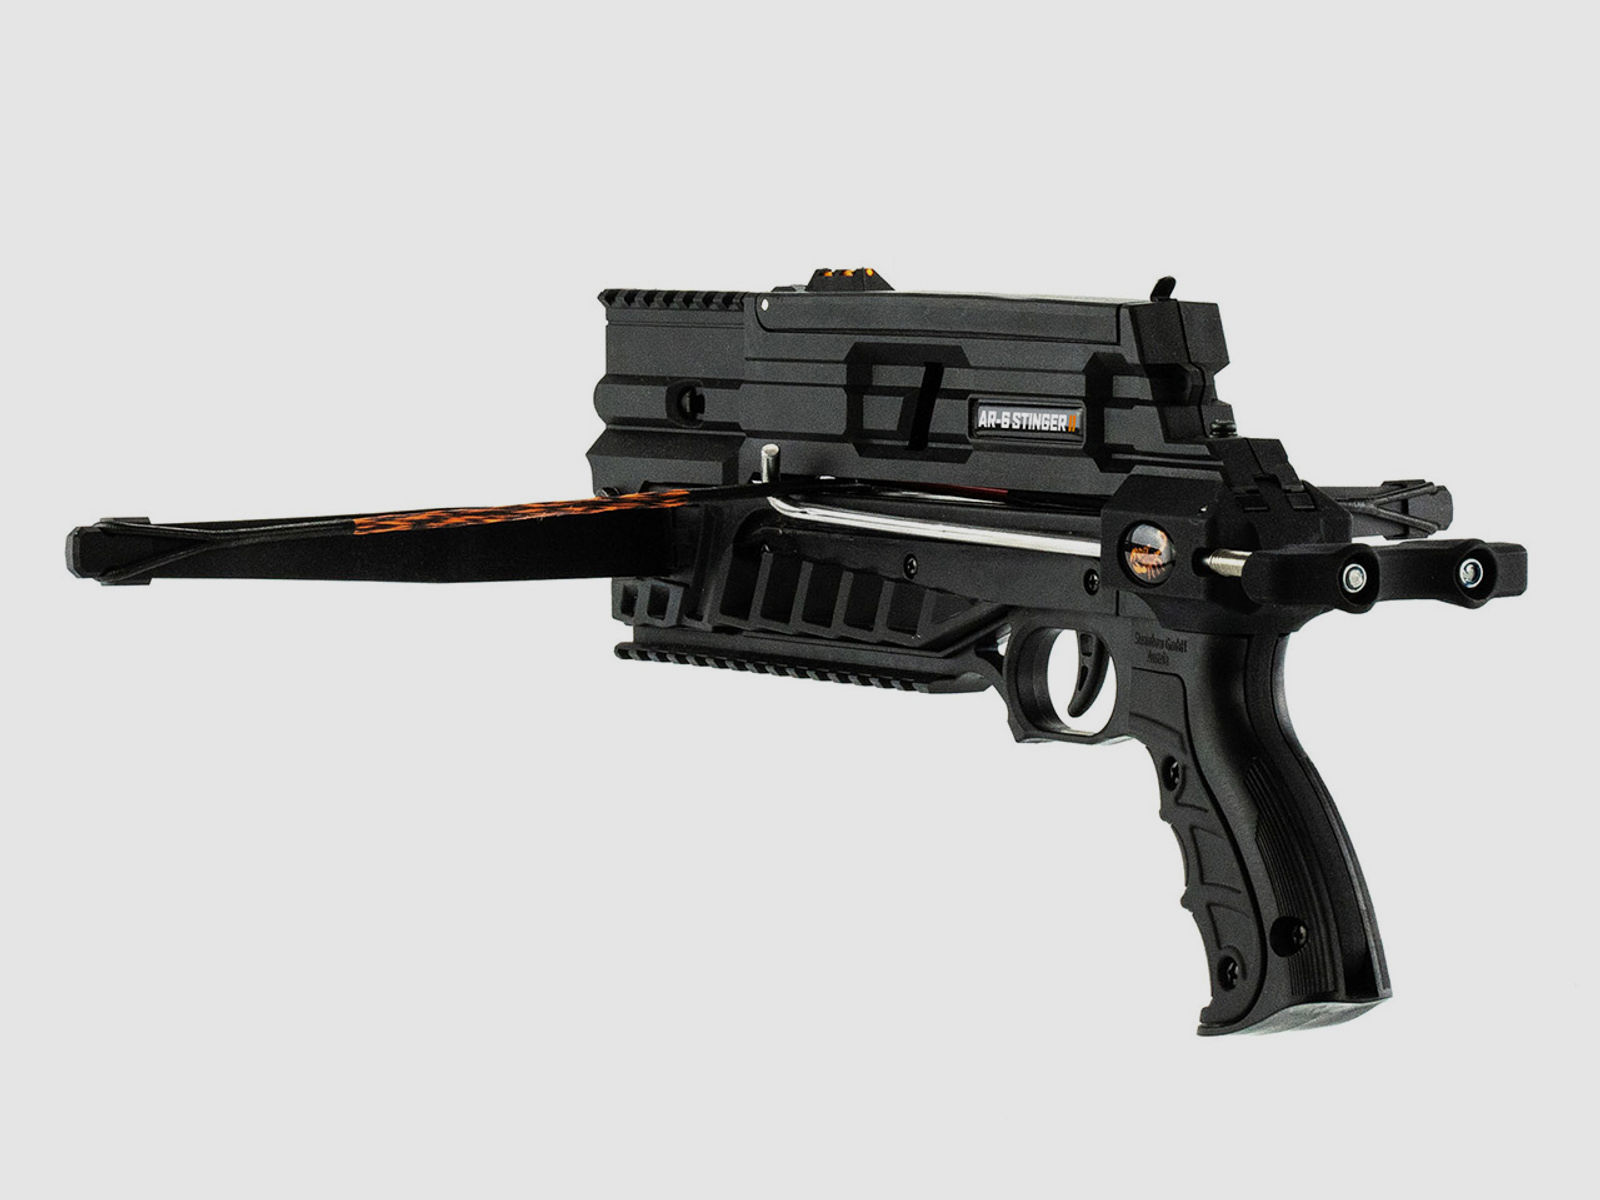 Multishot Pistolenarmbrust Steambow AR-6 Stinger II Compact 35 lbs 6 Schuss Magazin (P18)